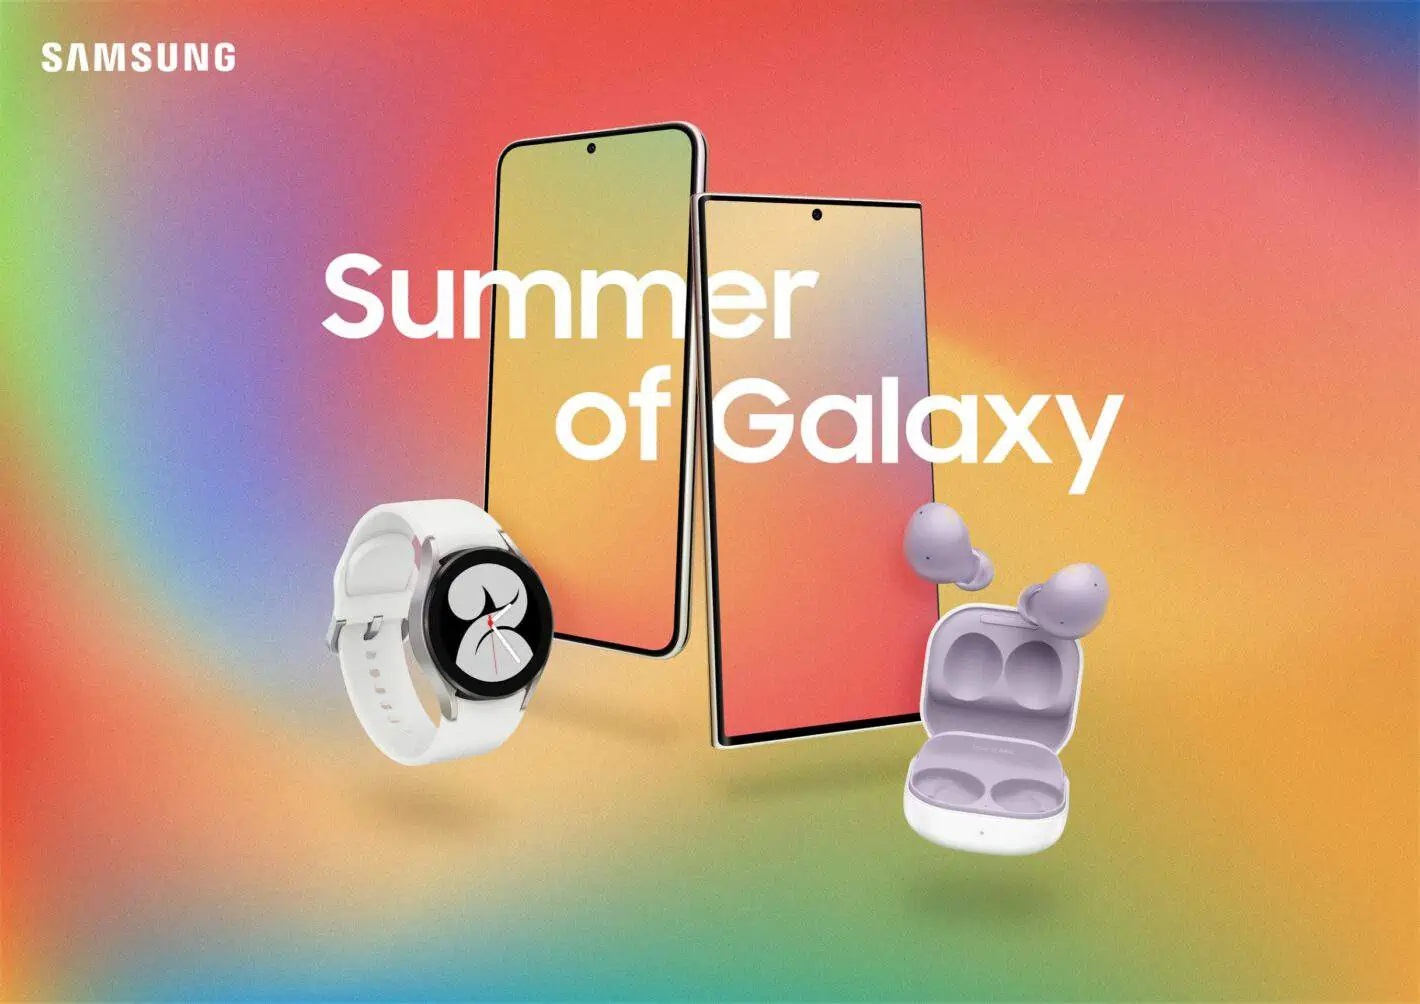 Samsung-Summer-of-Galaxy-event-1420x1004.jpg